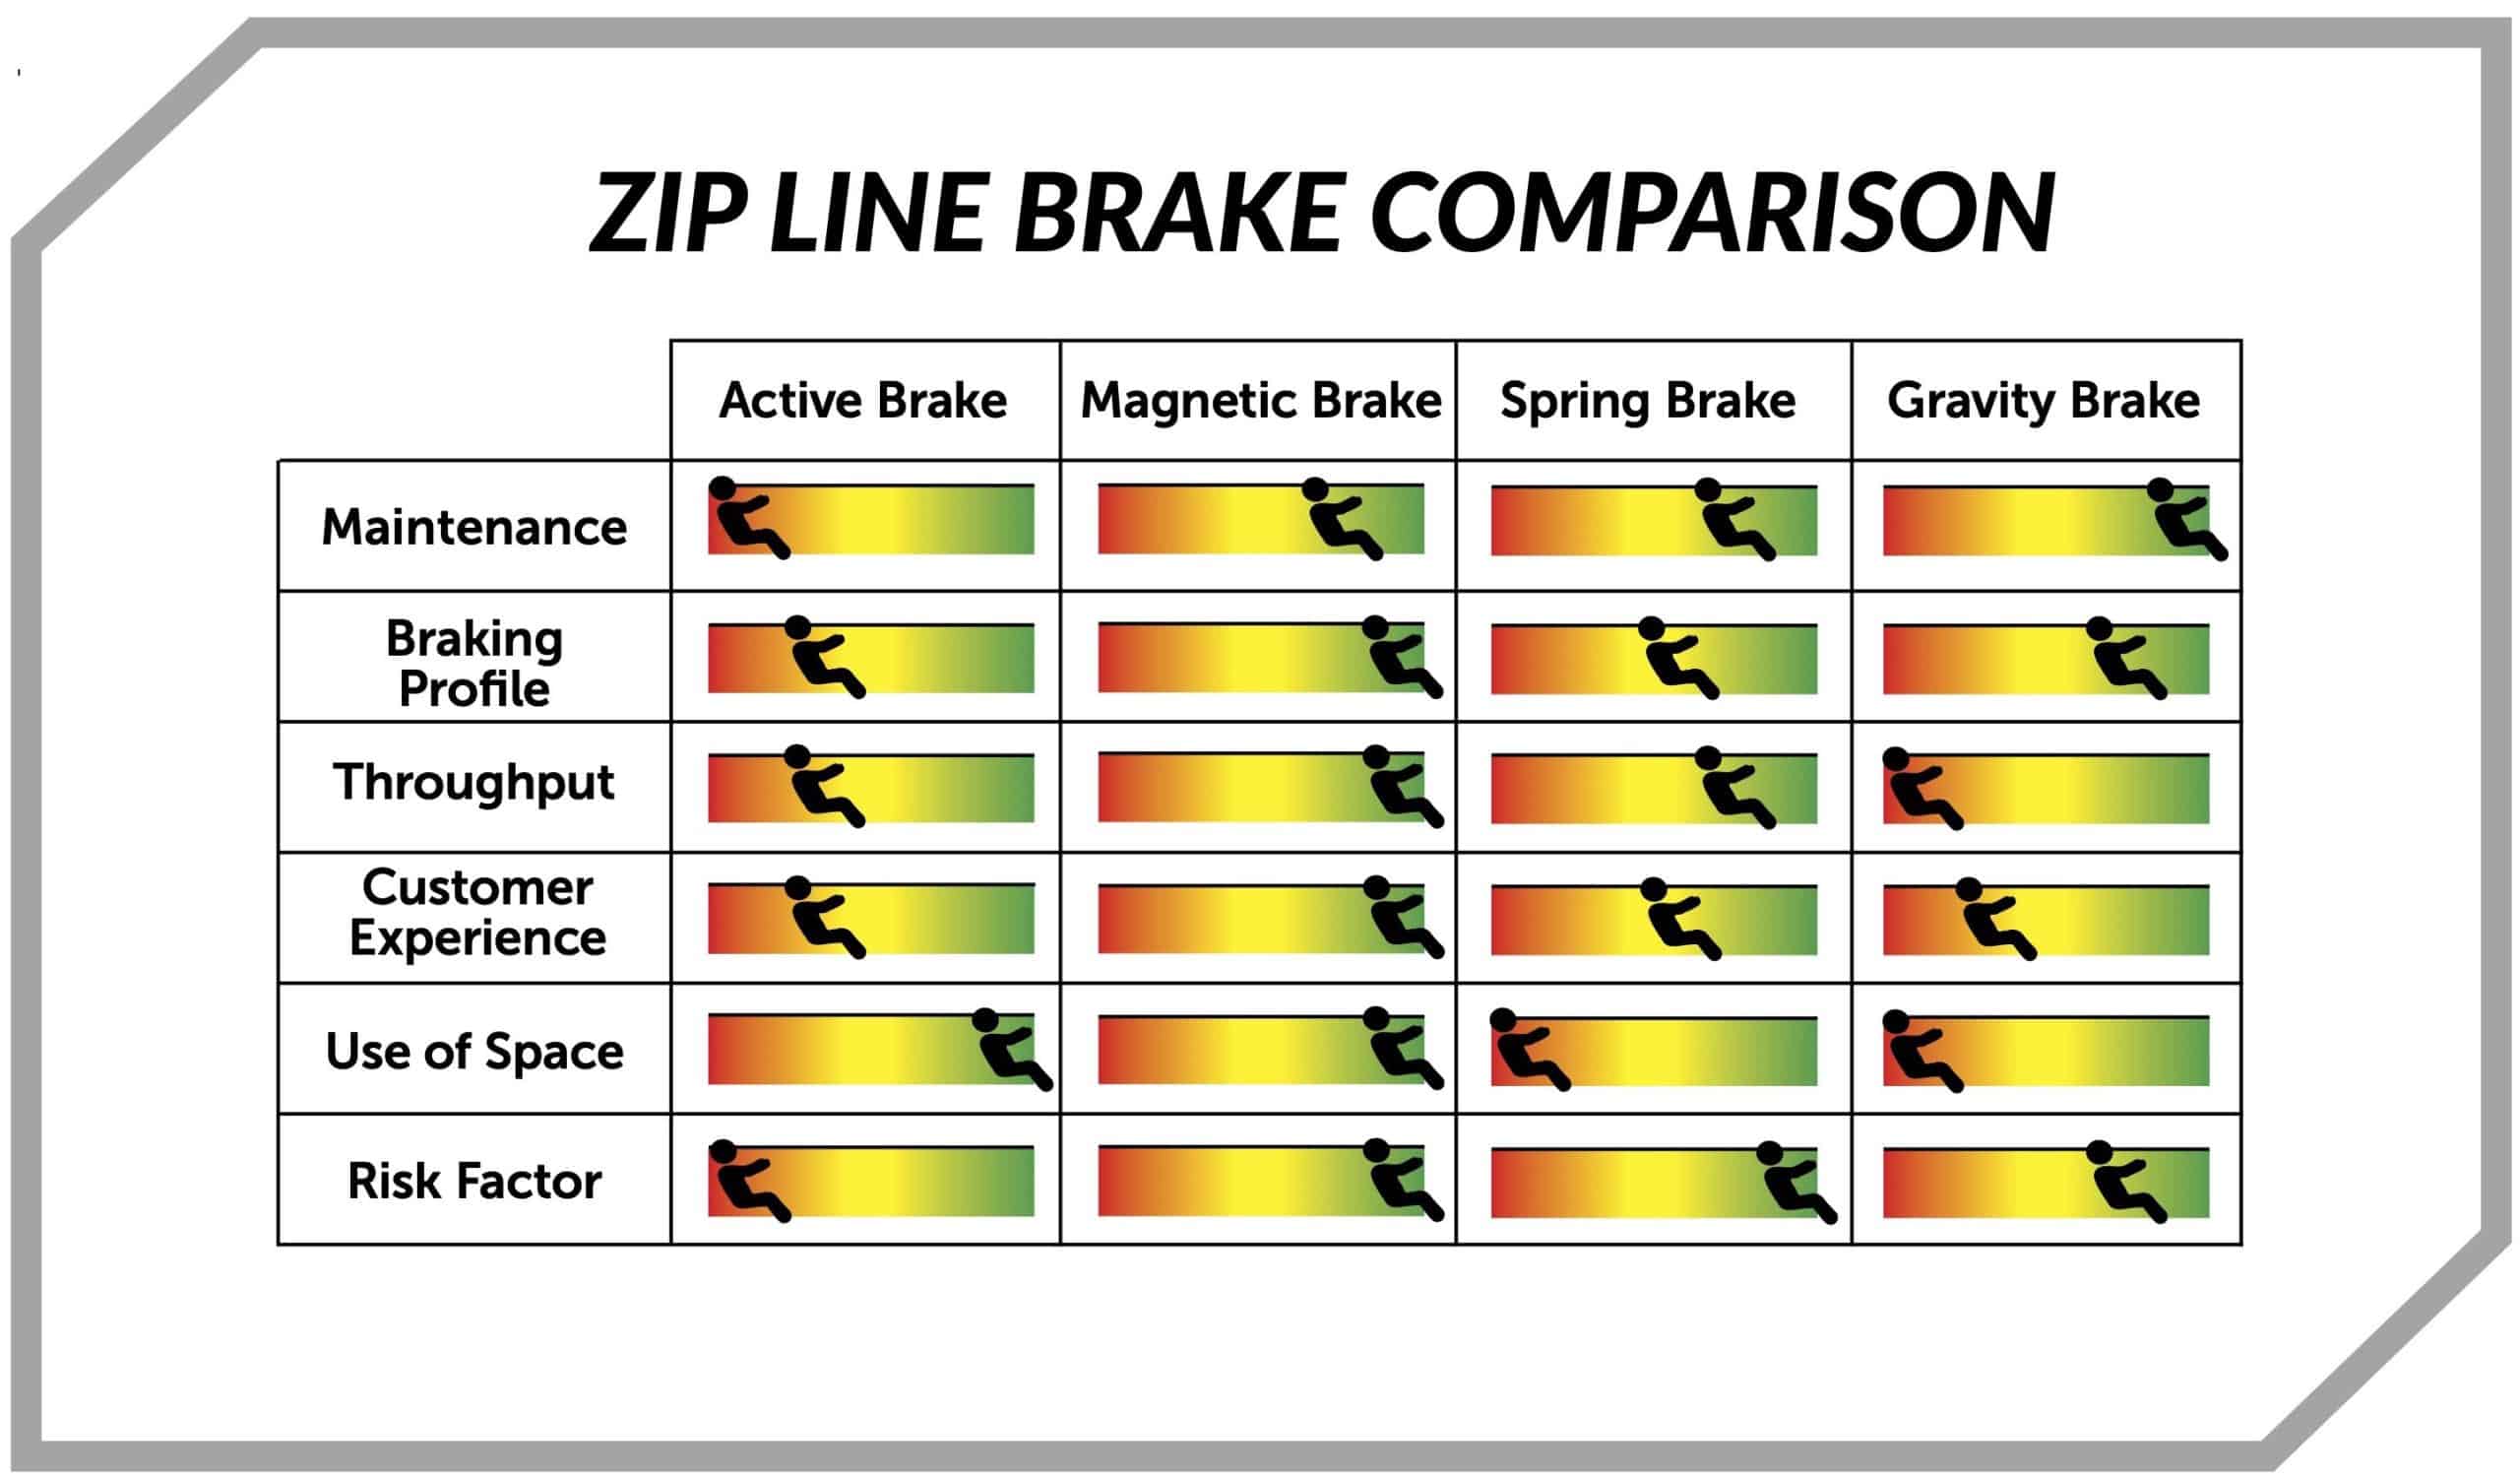 Zip line brake comparison chart